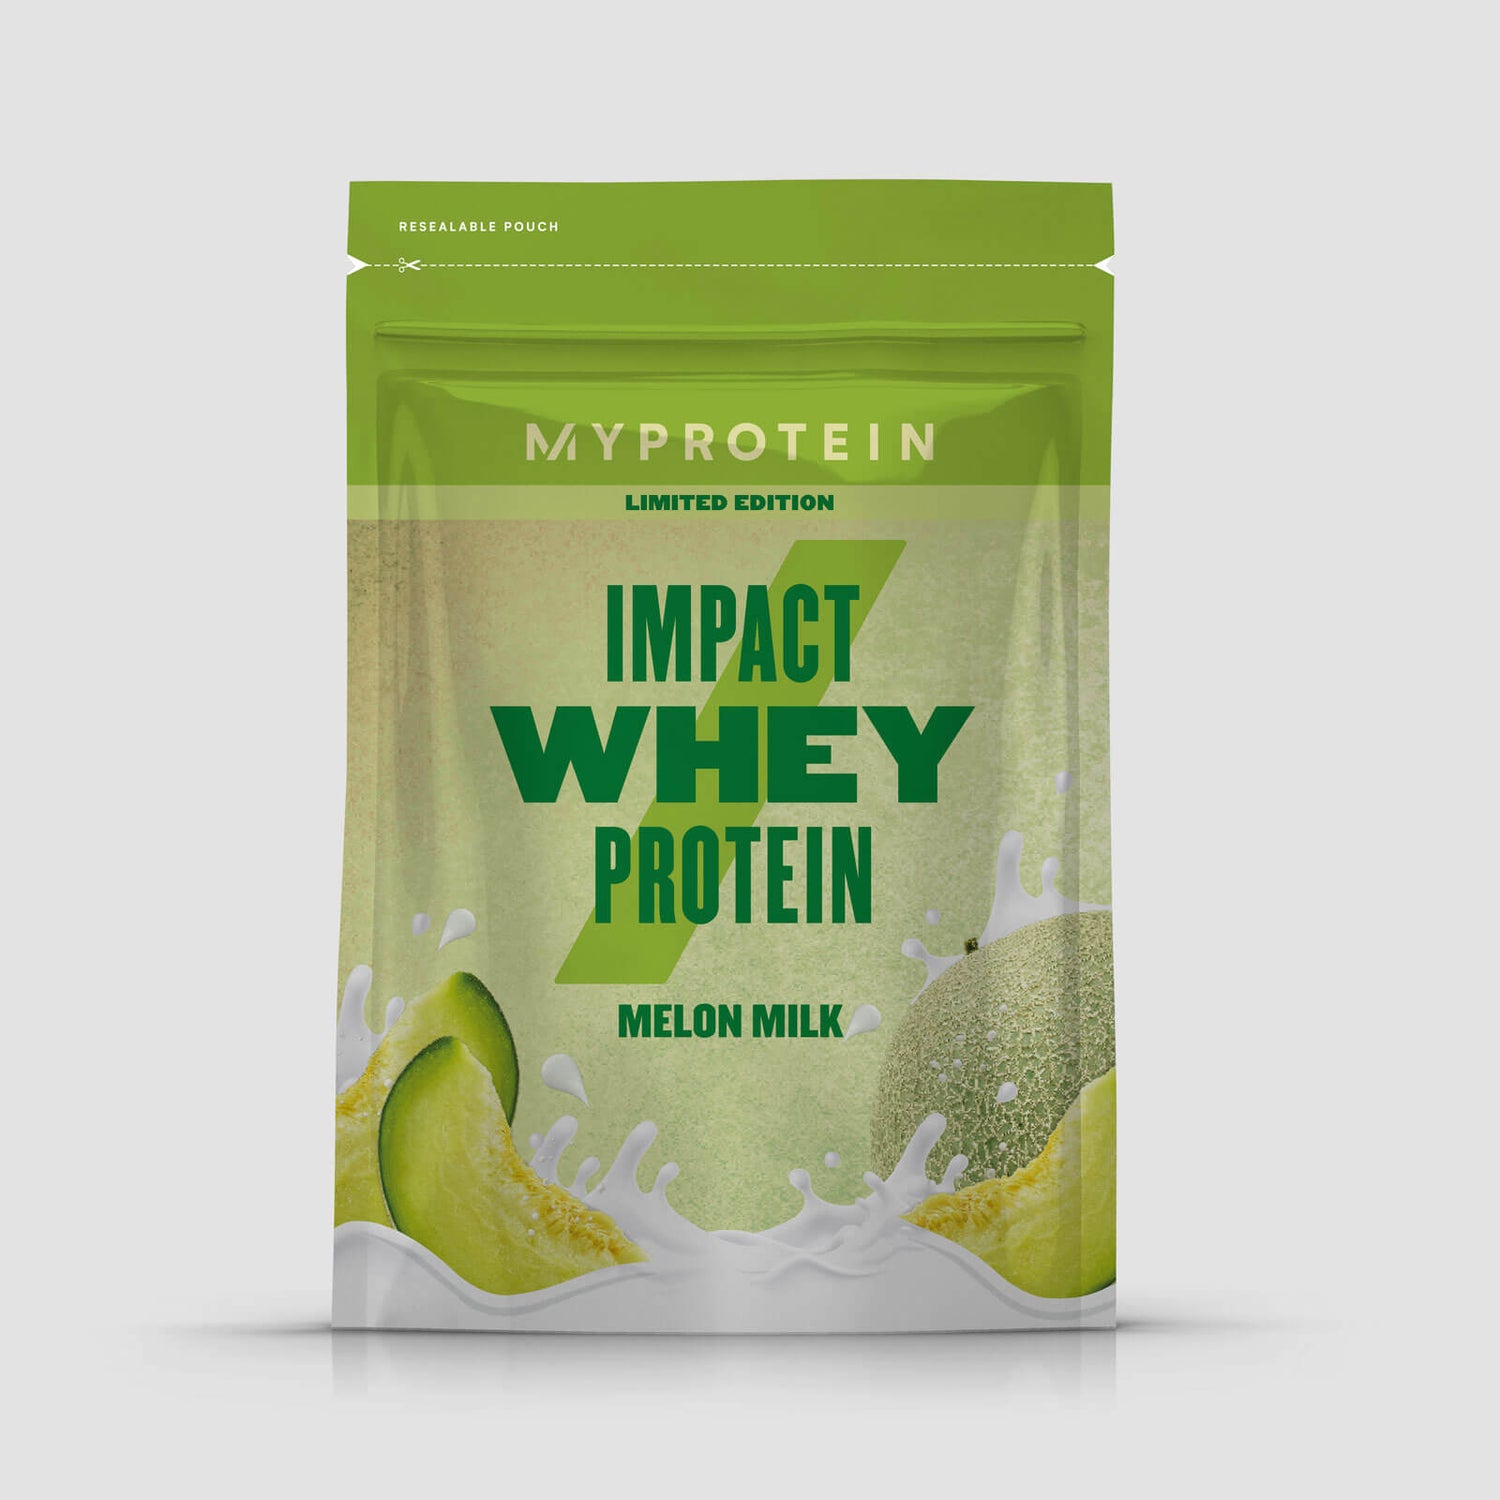 Impact Whey Protein - Melon Milk flavour - 250g - Melon Milk